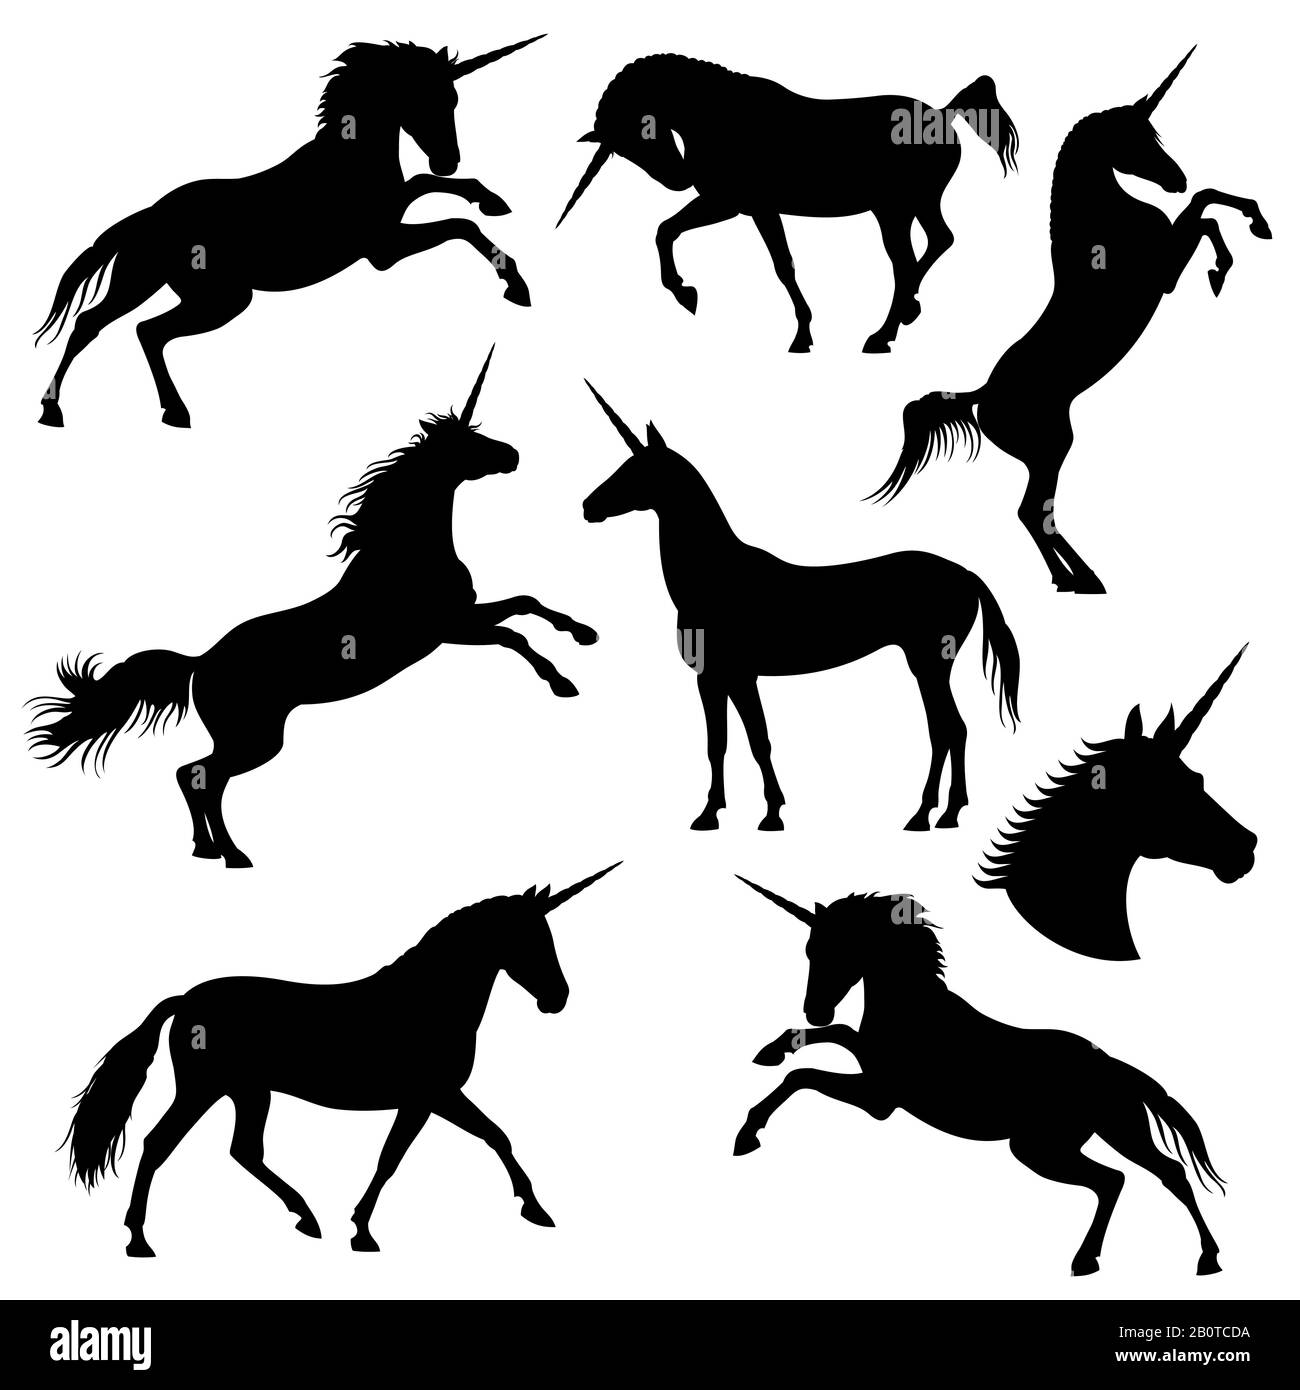 Mythical rebellious unicorn vector black silhouettes. Unicorn black form, illustration of fantasy horse unicorn Stock Vector